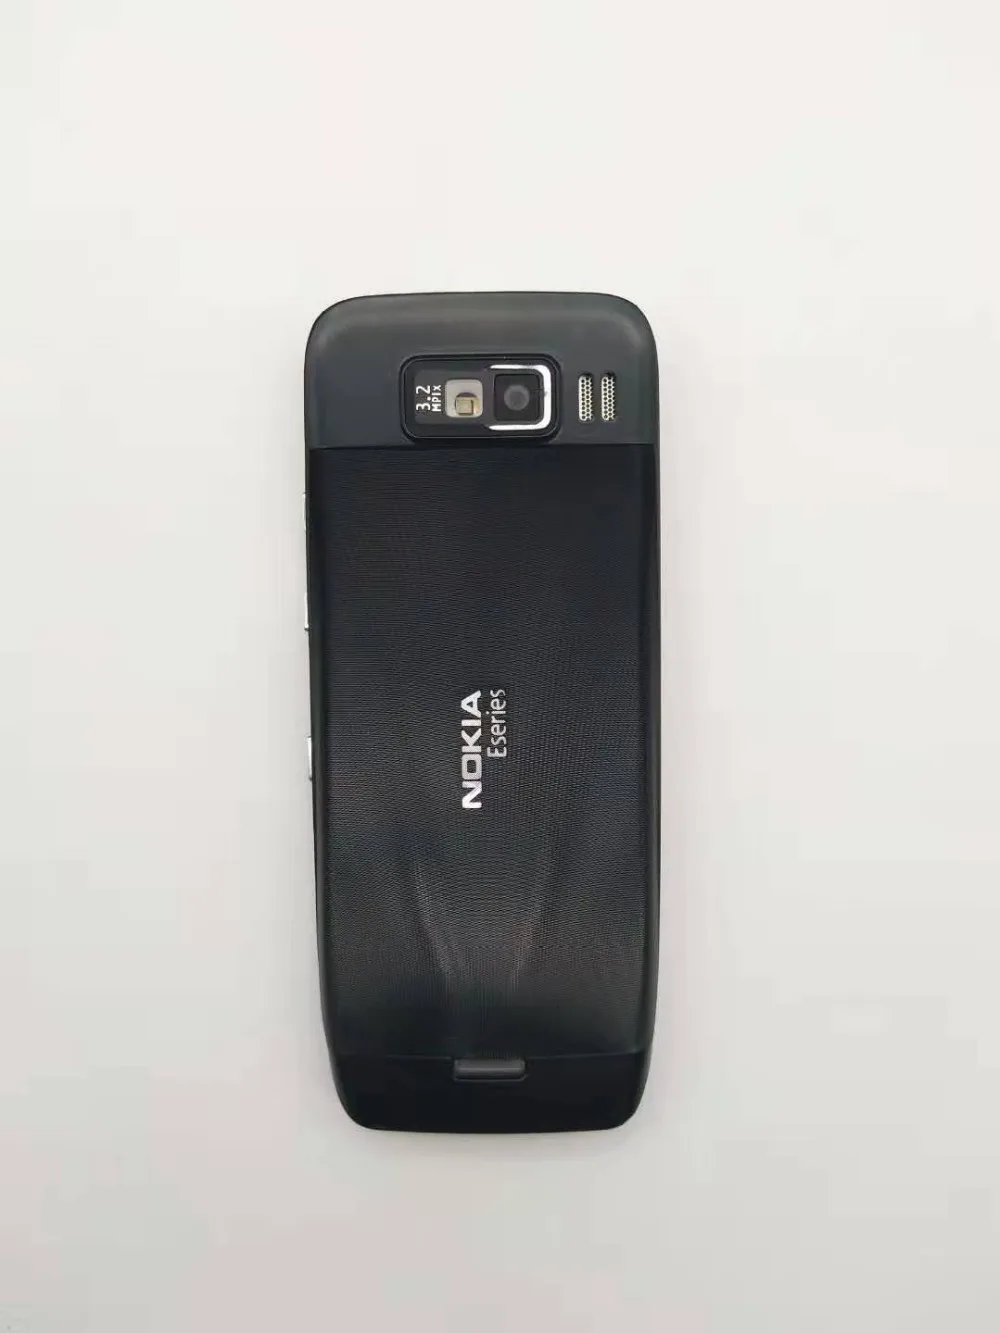 Nokia E52 refurbished-Original Nokia E52 WIFI GPS JAVA 3G Unlocked Mobile Phone handset Russian Arabic Hebrew keyboard phone top android cell phones